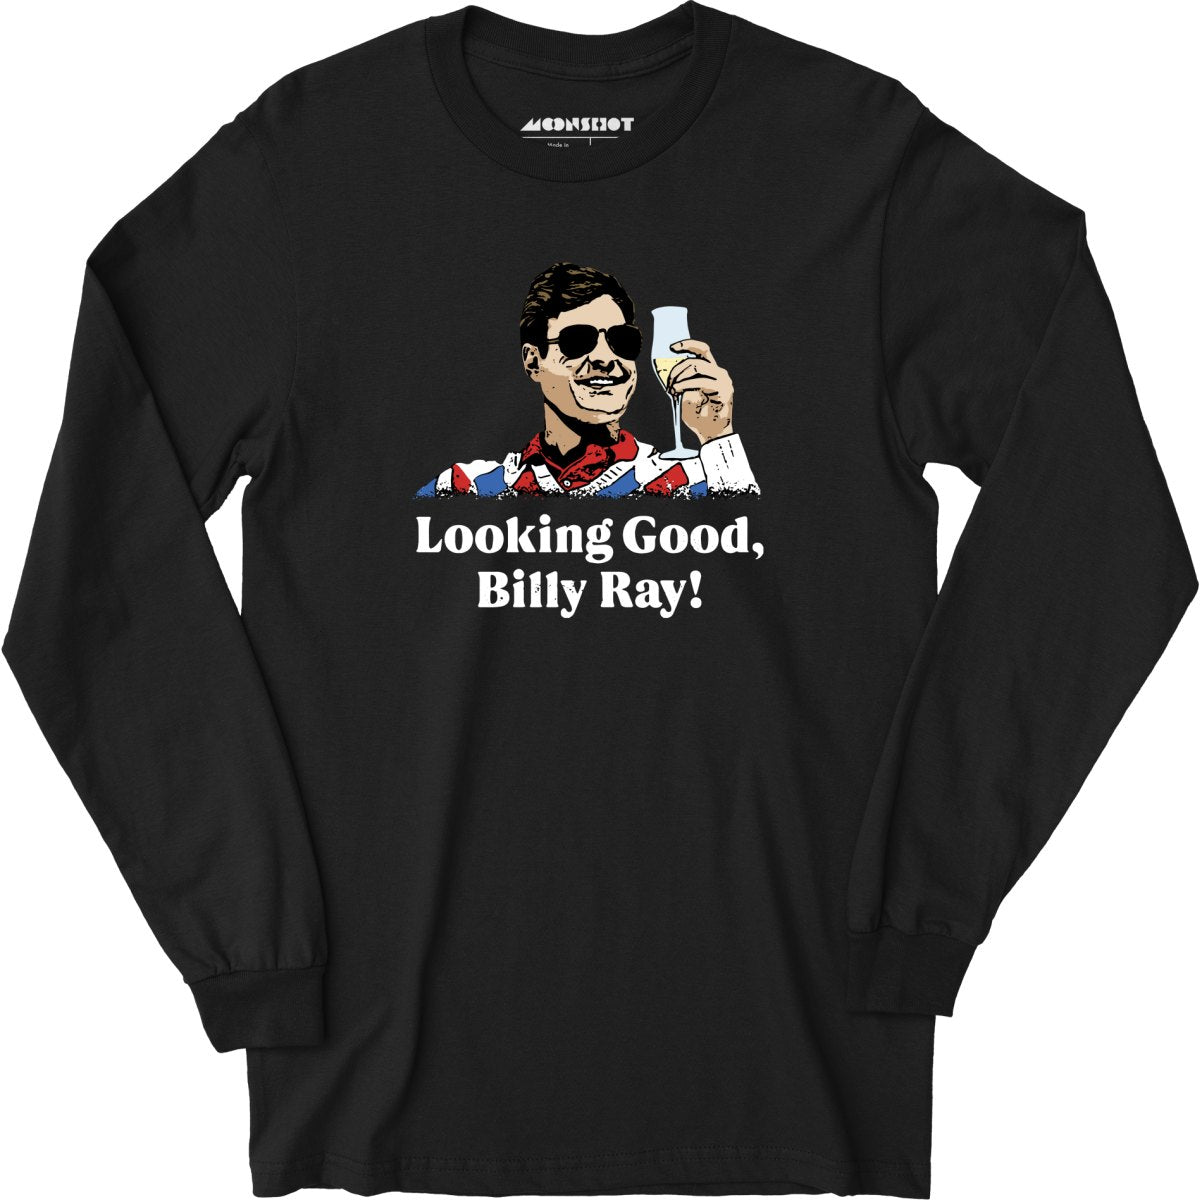 Looking Good, Billy Ray! - Long Sleeve T-Shirt